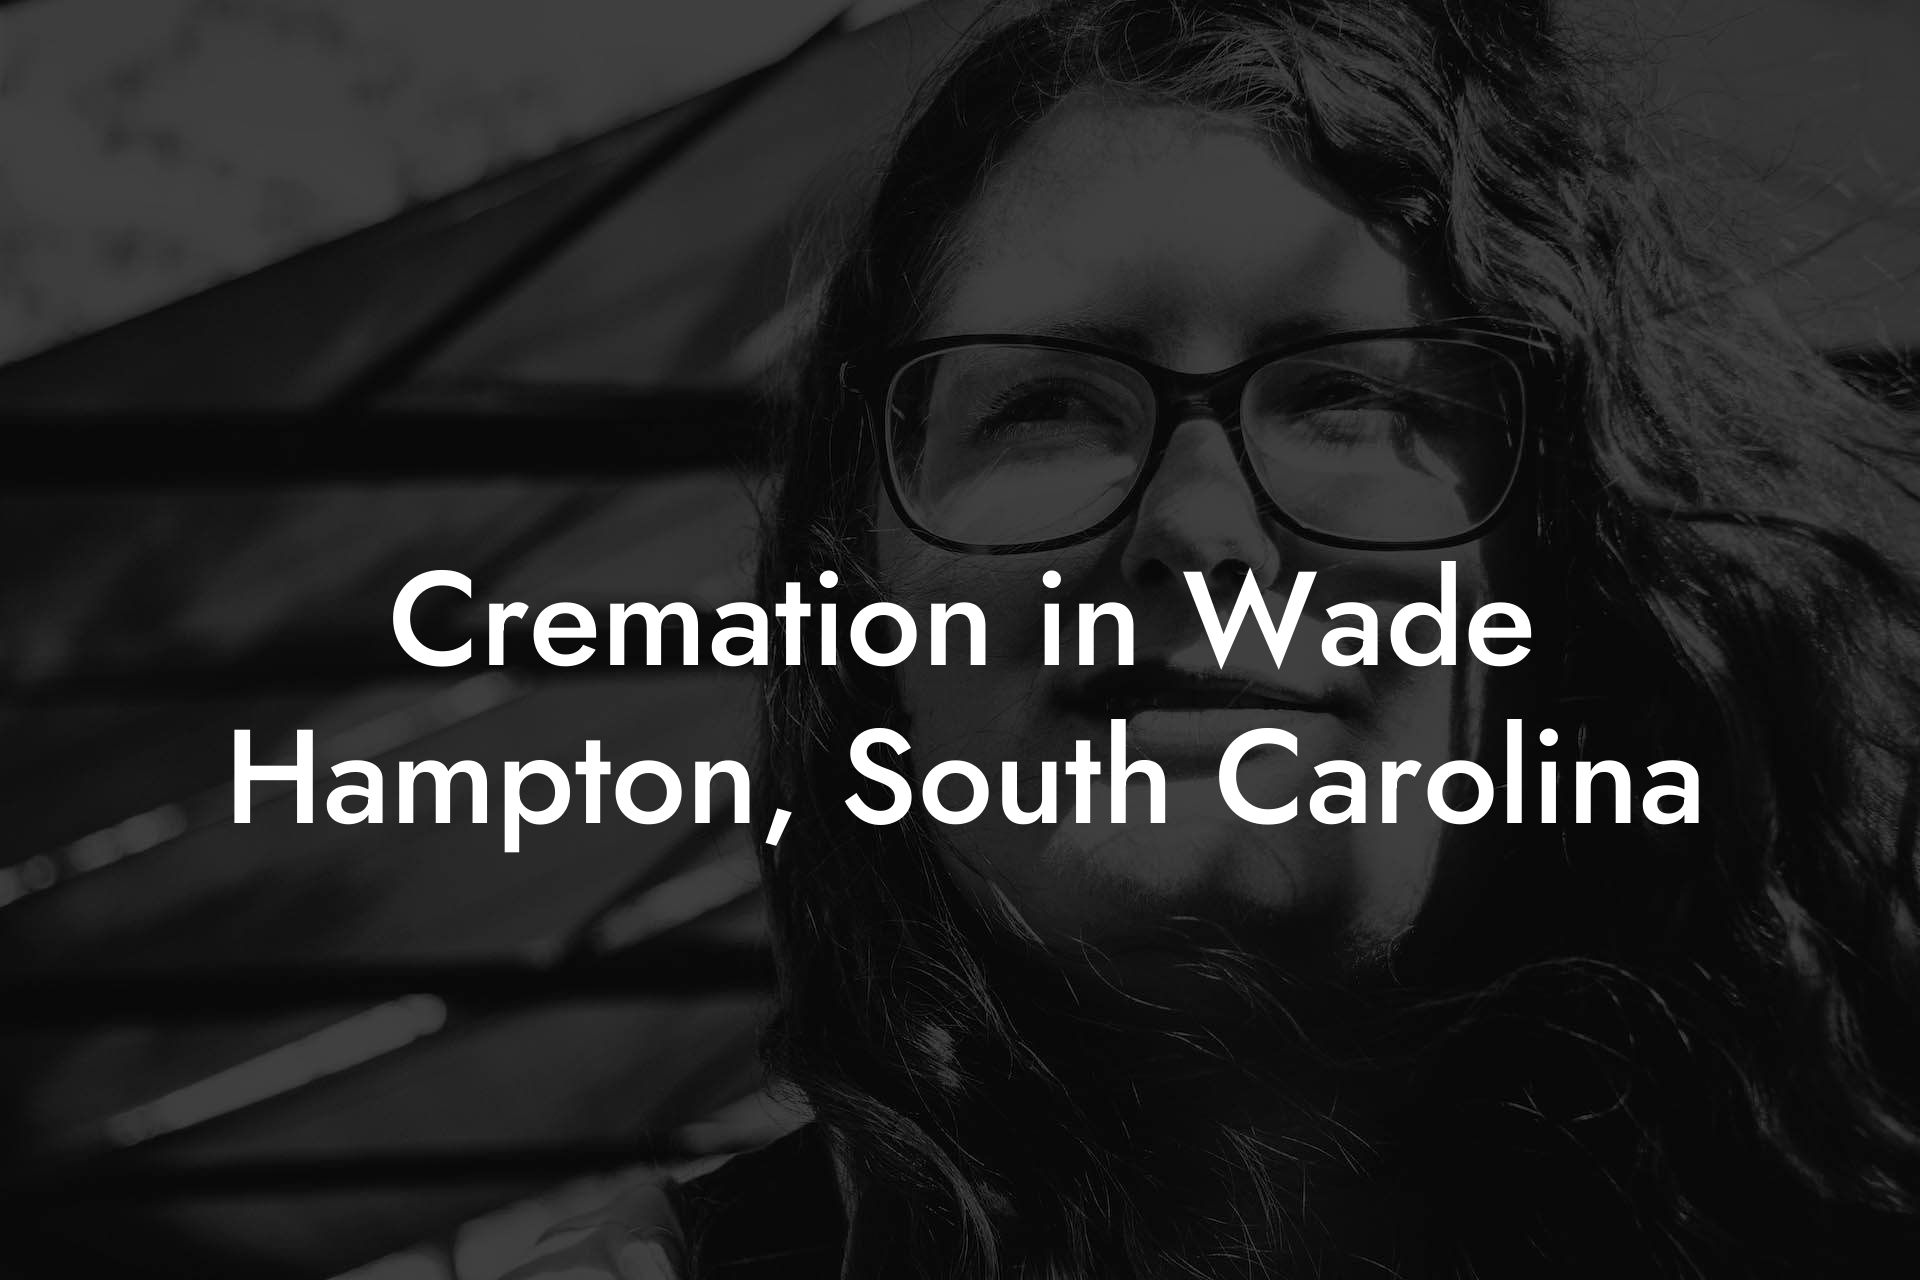 Cremation in Wade Hampton, South Carolina